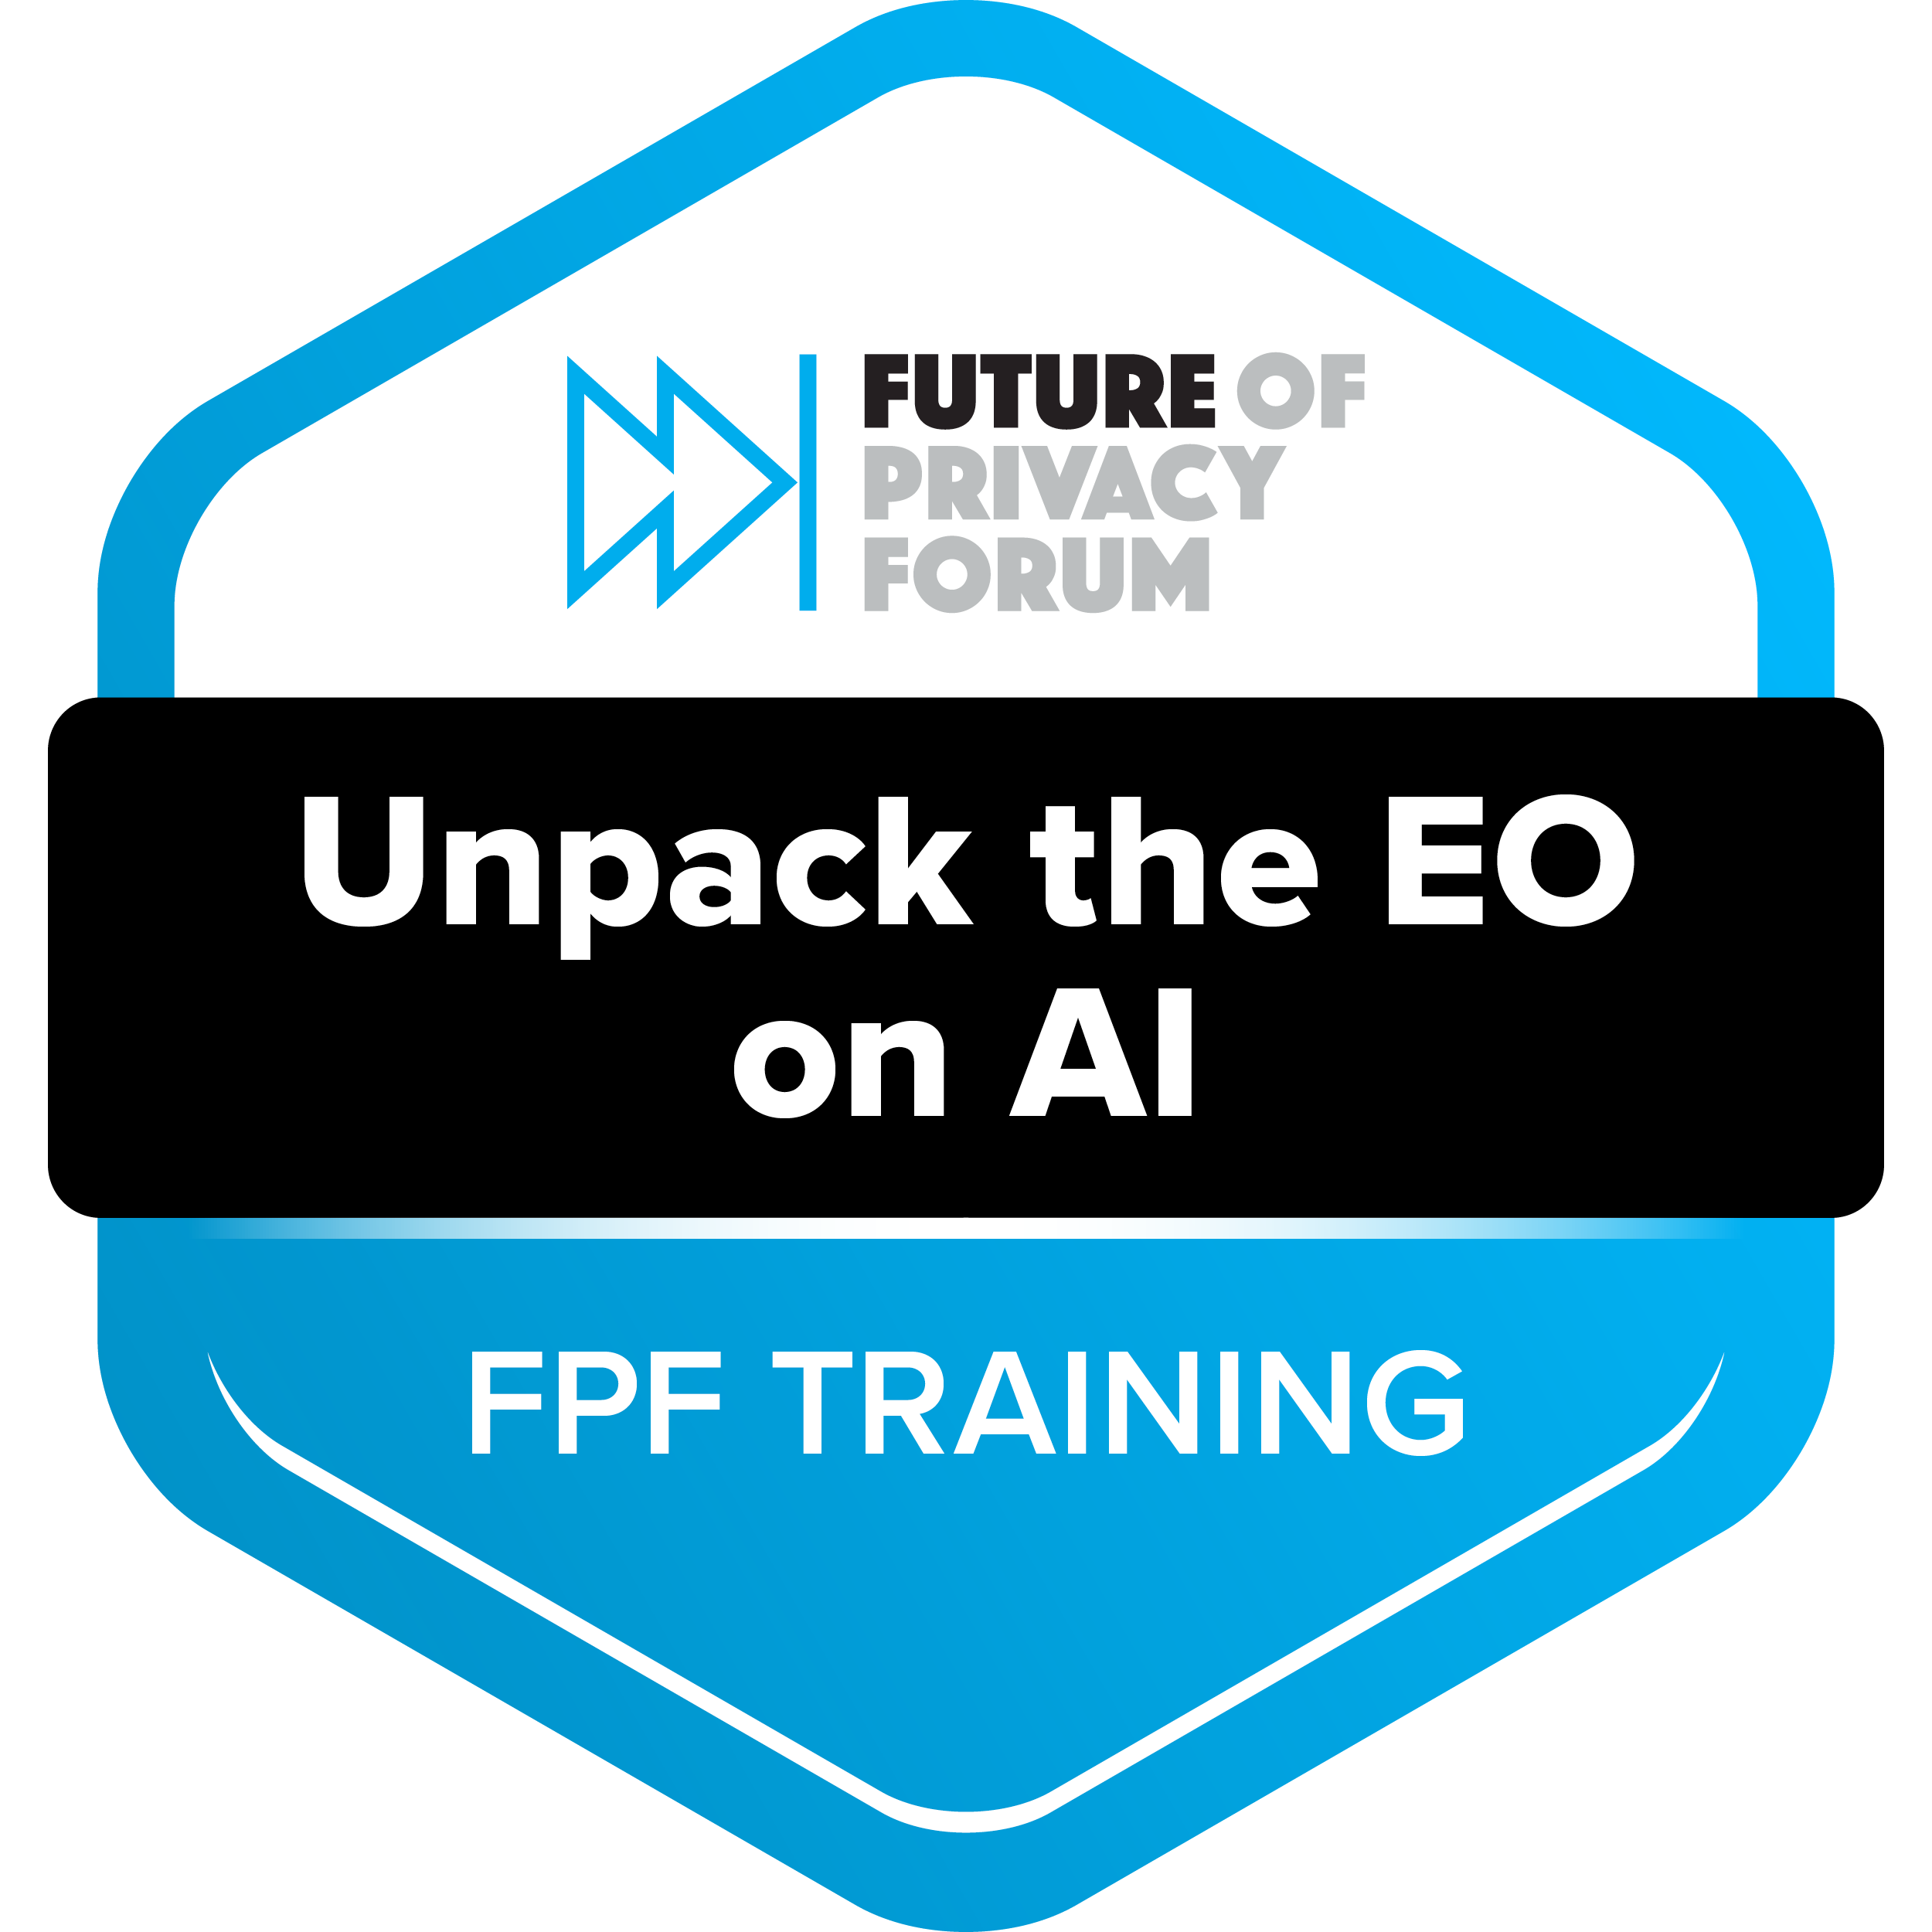 fpf training program badge unpack the eo on ai